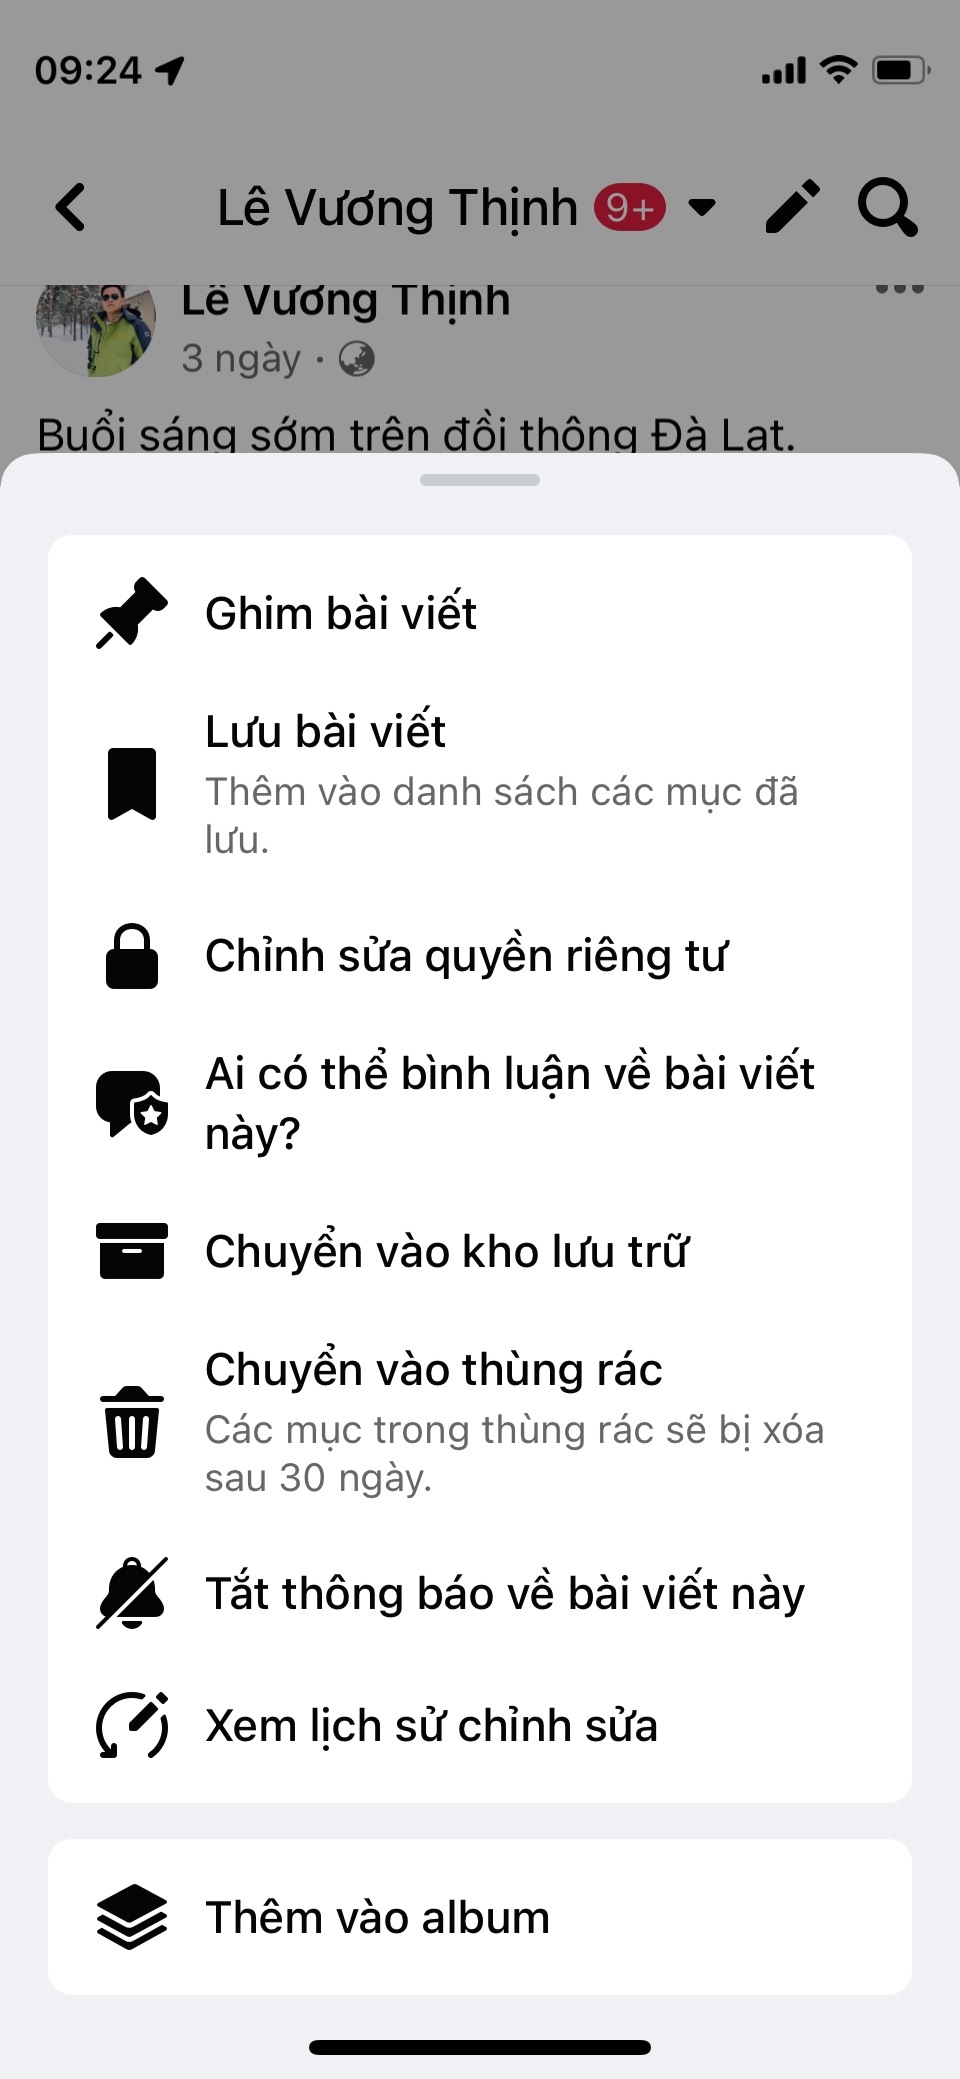 facebook khong cho sua bai dang tren dien thoai, loi hay la tinh nang hinh anh 1